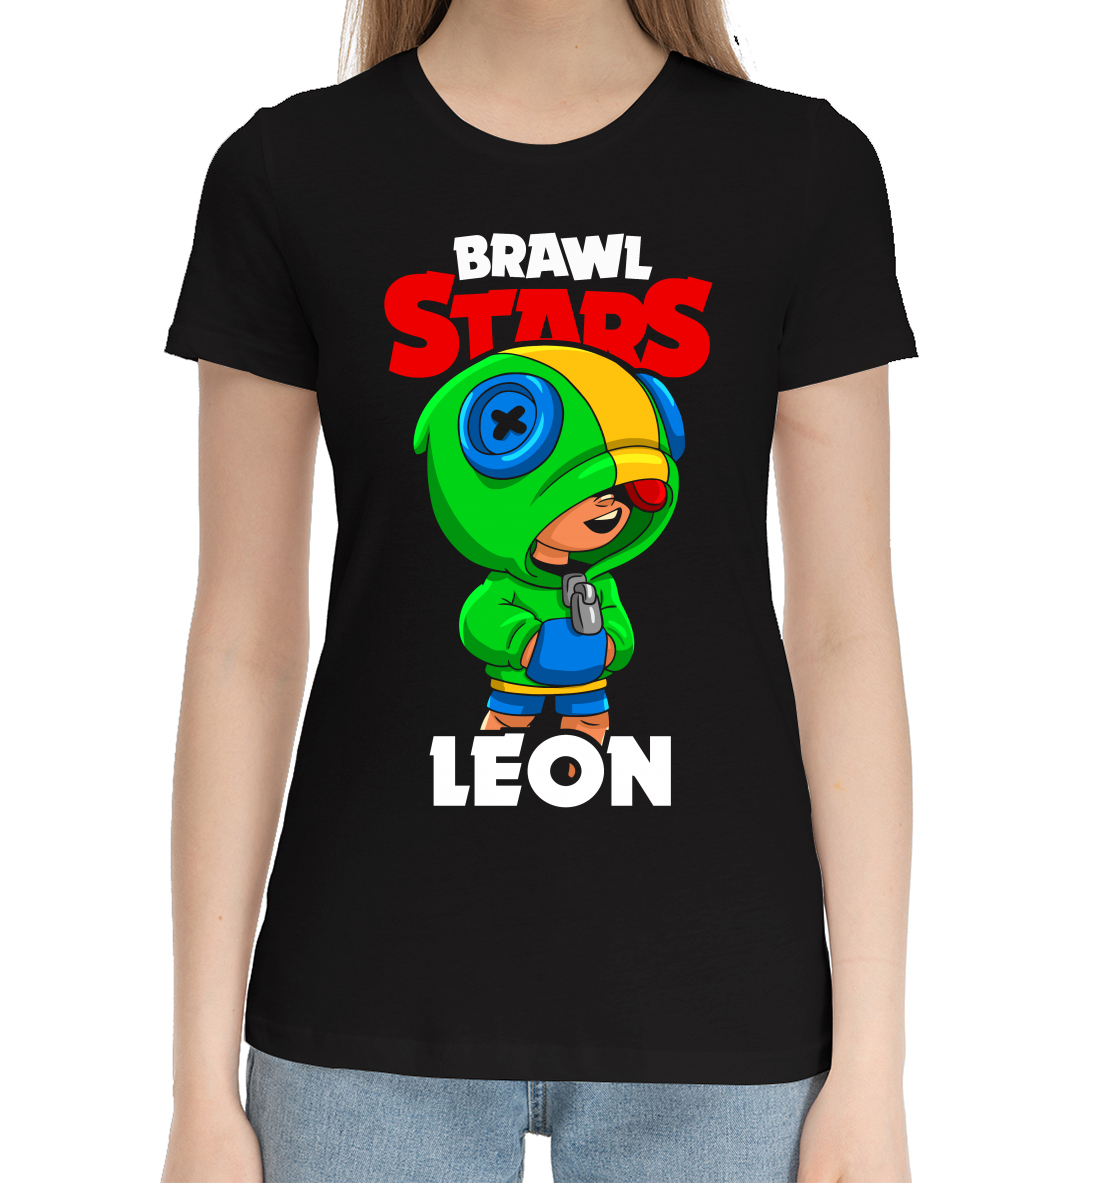 Женская Хлопковая футболка с принтом Brawl Stars, Leon, артикул CLH-265297-hfu-1mp